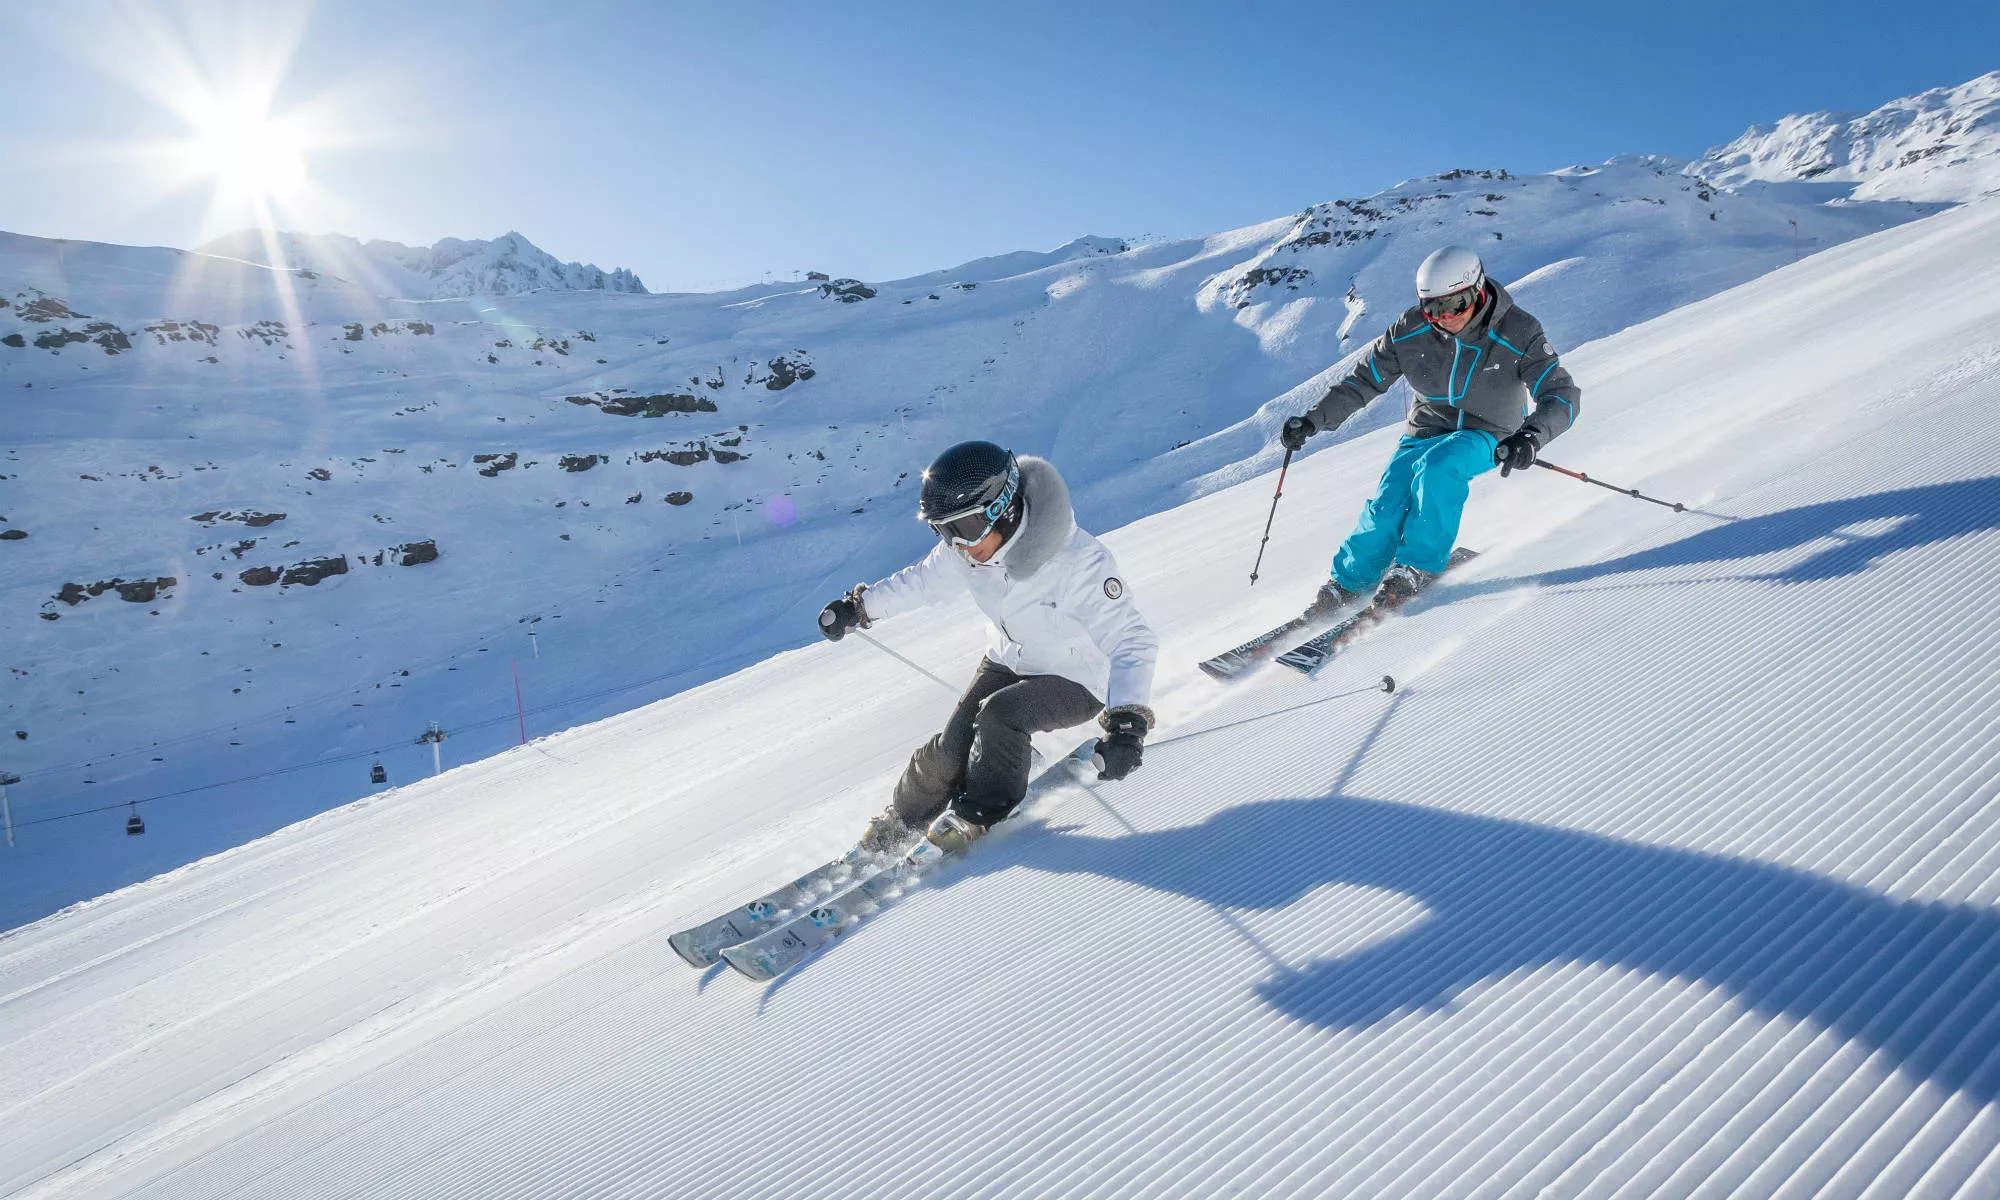 Red Ski School in Greece, Europe | Snowboarding,Skiing - Rated 0.9